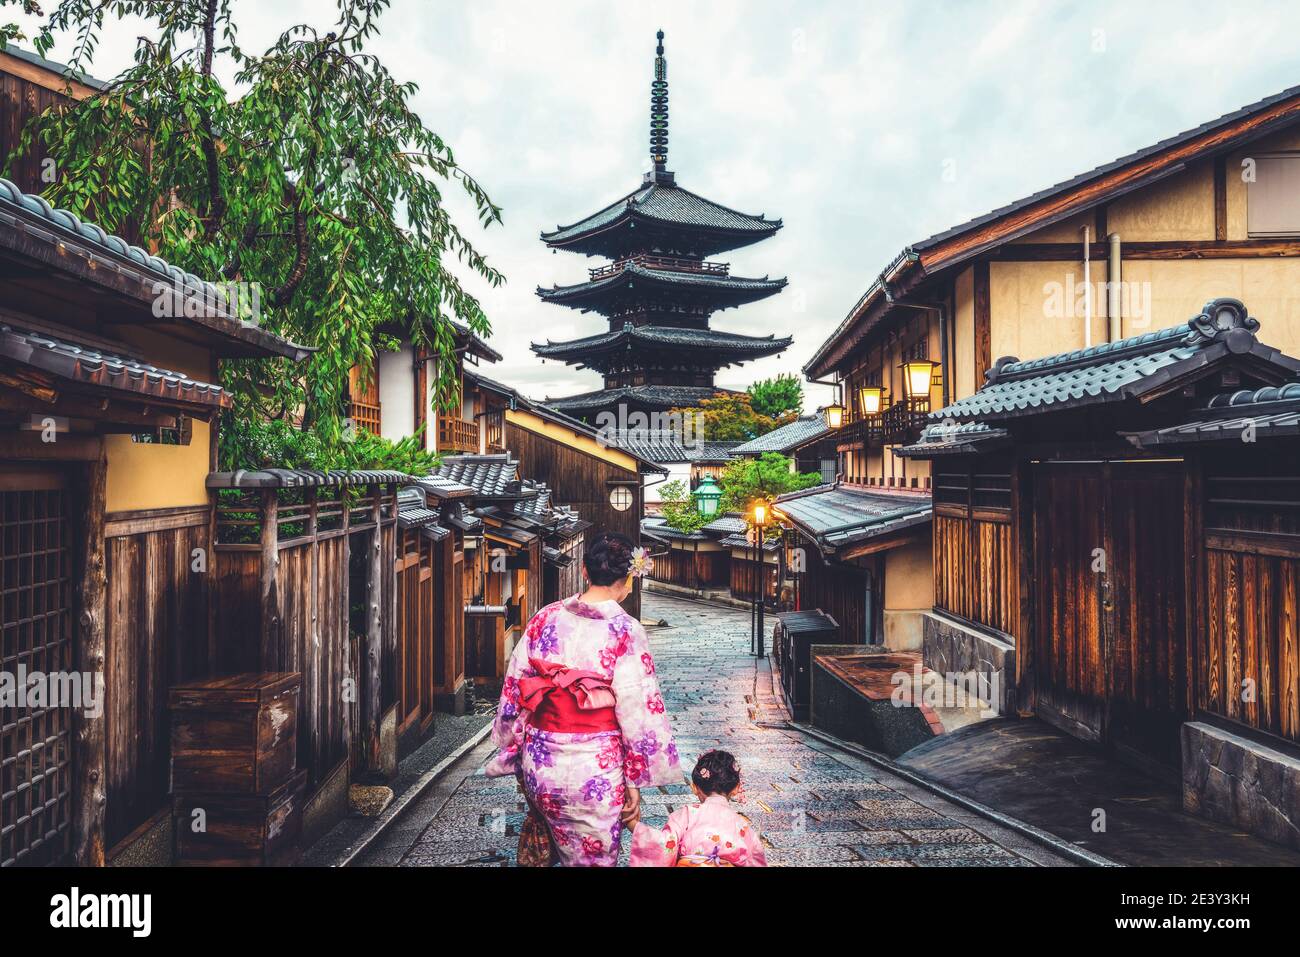 Kyoto, Japan Culture Travel - Asian traveler wearing traditional Japanese kimono walking in Higashiyama district in the old town of Kyoto, Japan. Stock Photo